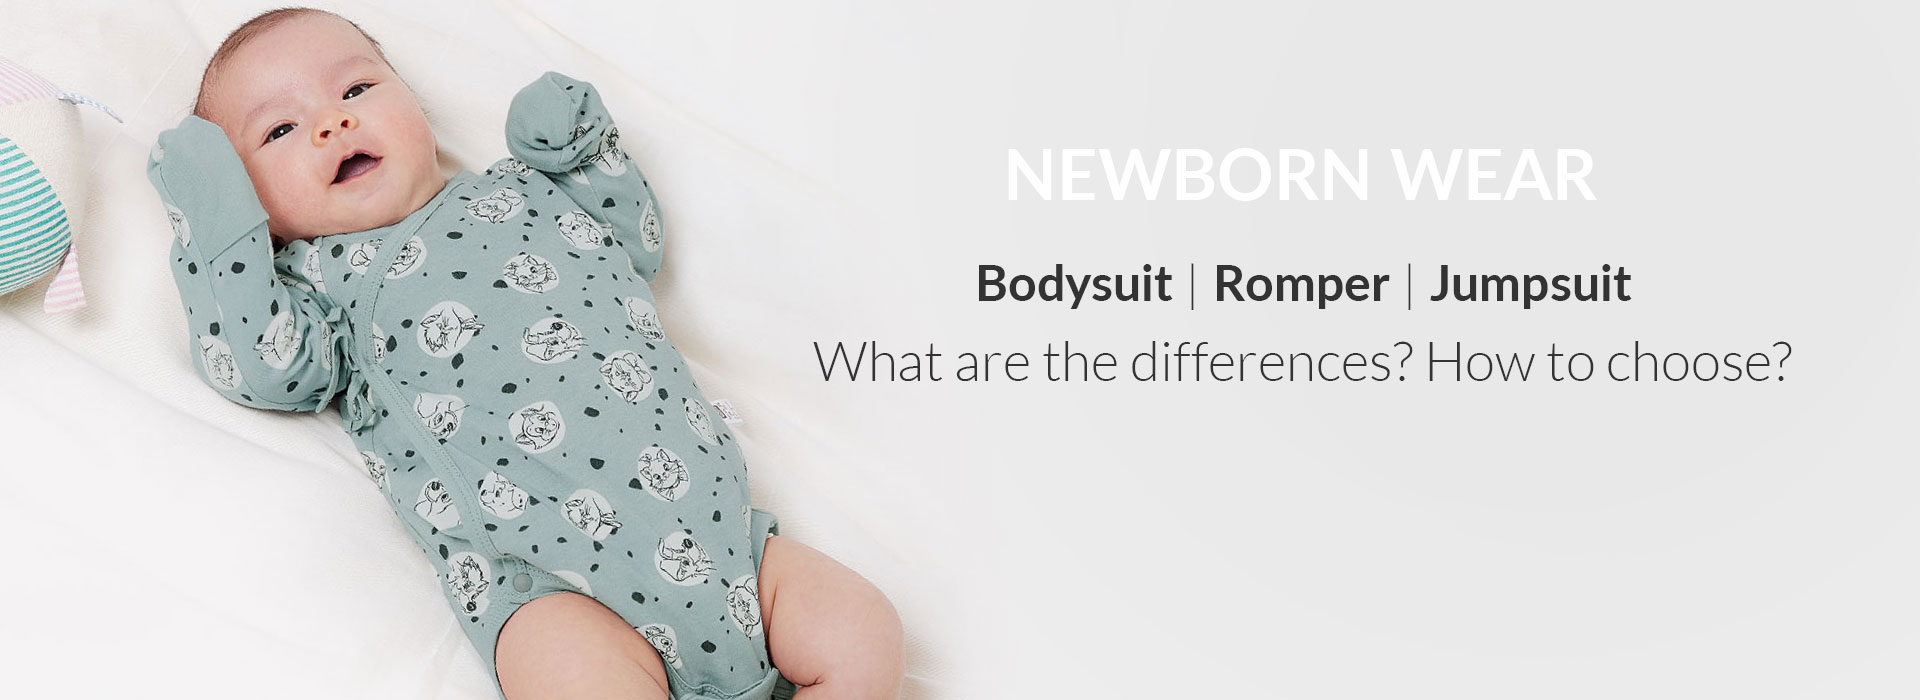 How to choose Newborn wear?